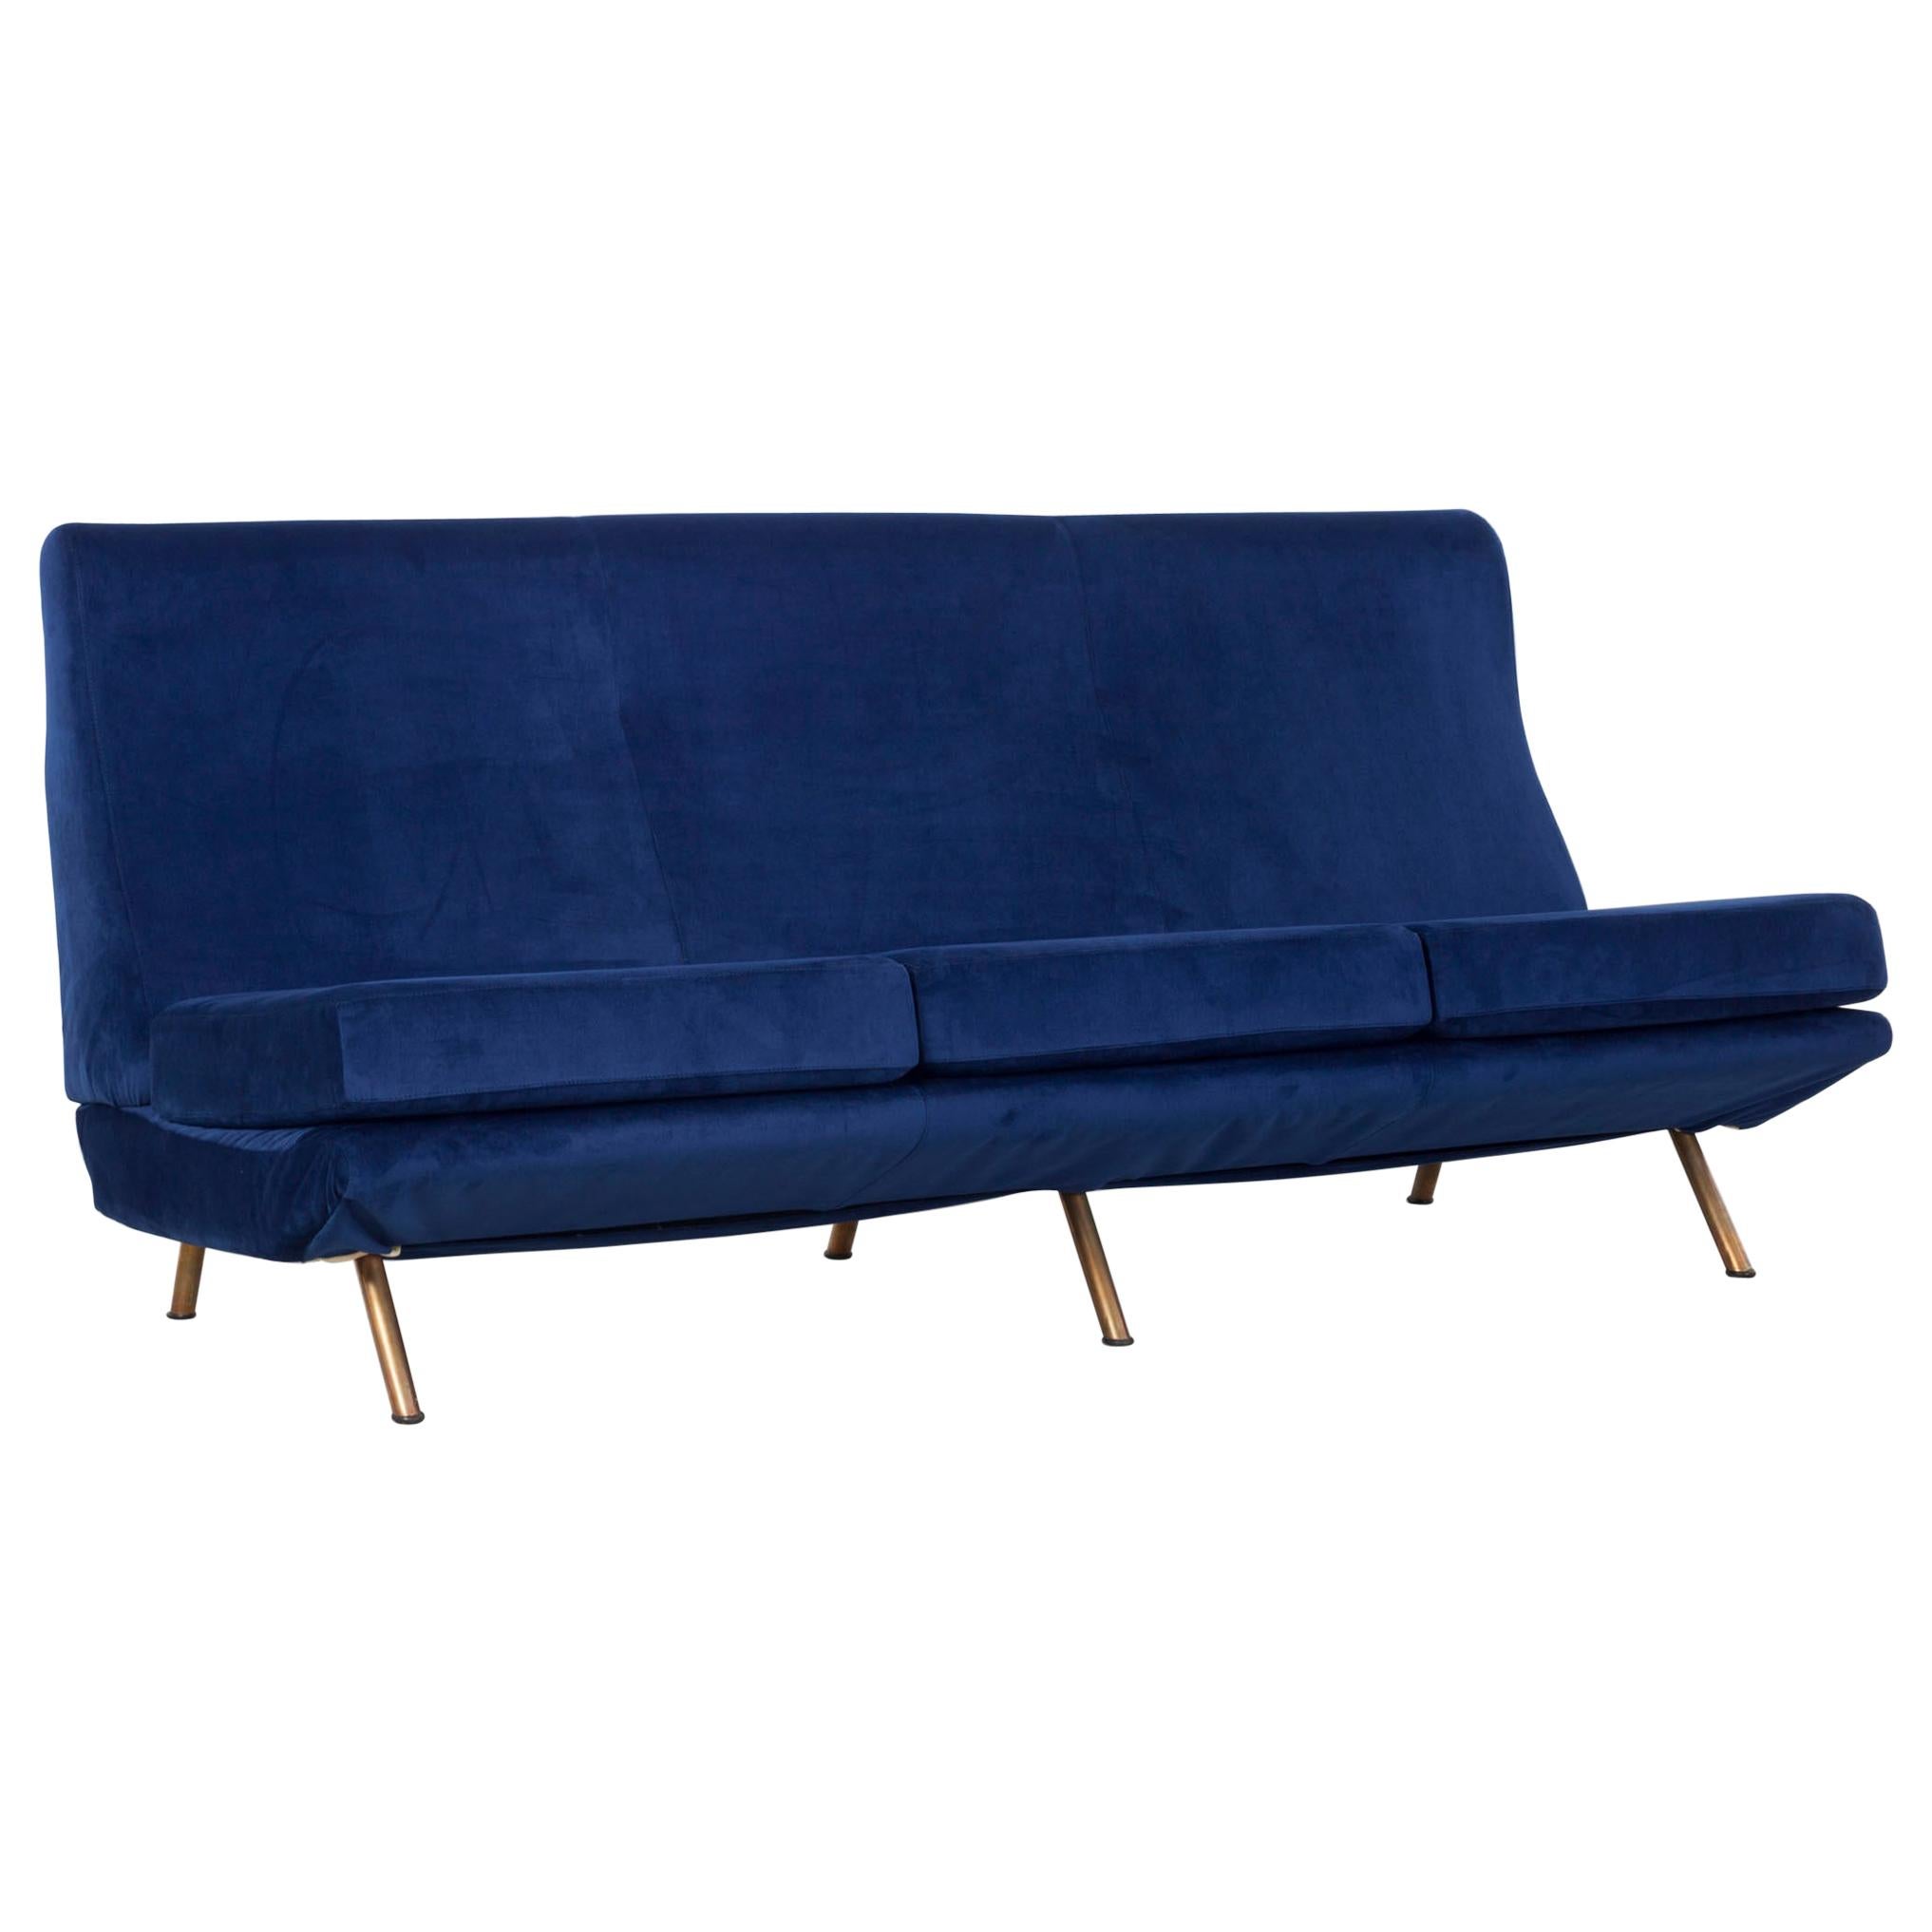 Velvet Deep Blue Three-Seat Sofa Model “Triennale”, Marco Zanuso, Arflex, 1956